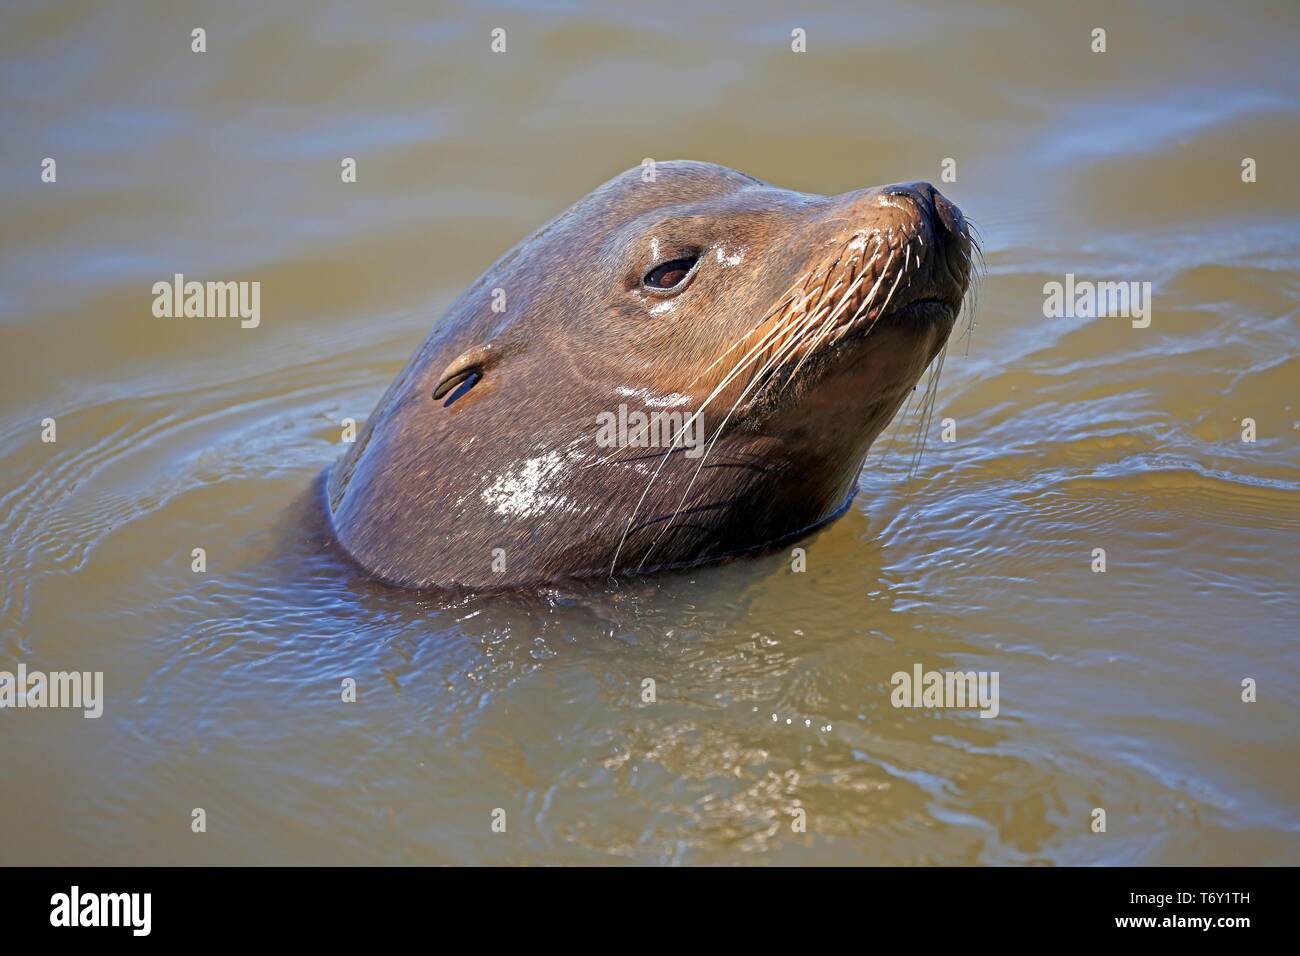 Galapagos-seelöwe (zalophus californianus), Erwachsener, Tier portrait in Wasser, Floating, Elkhorn Slough, Monterey, Kalifornien, North America, USA Stockfoto